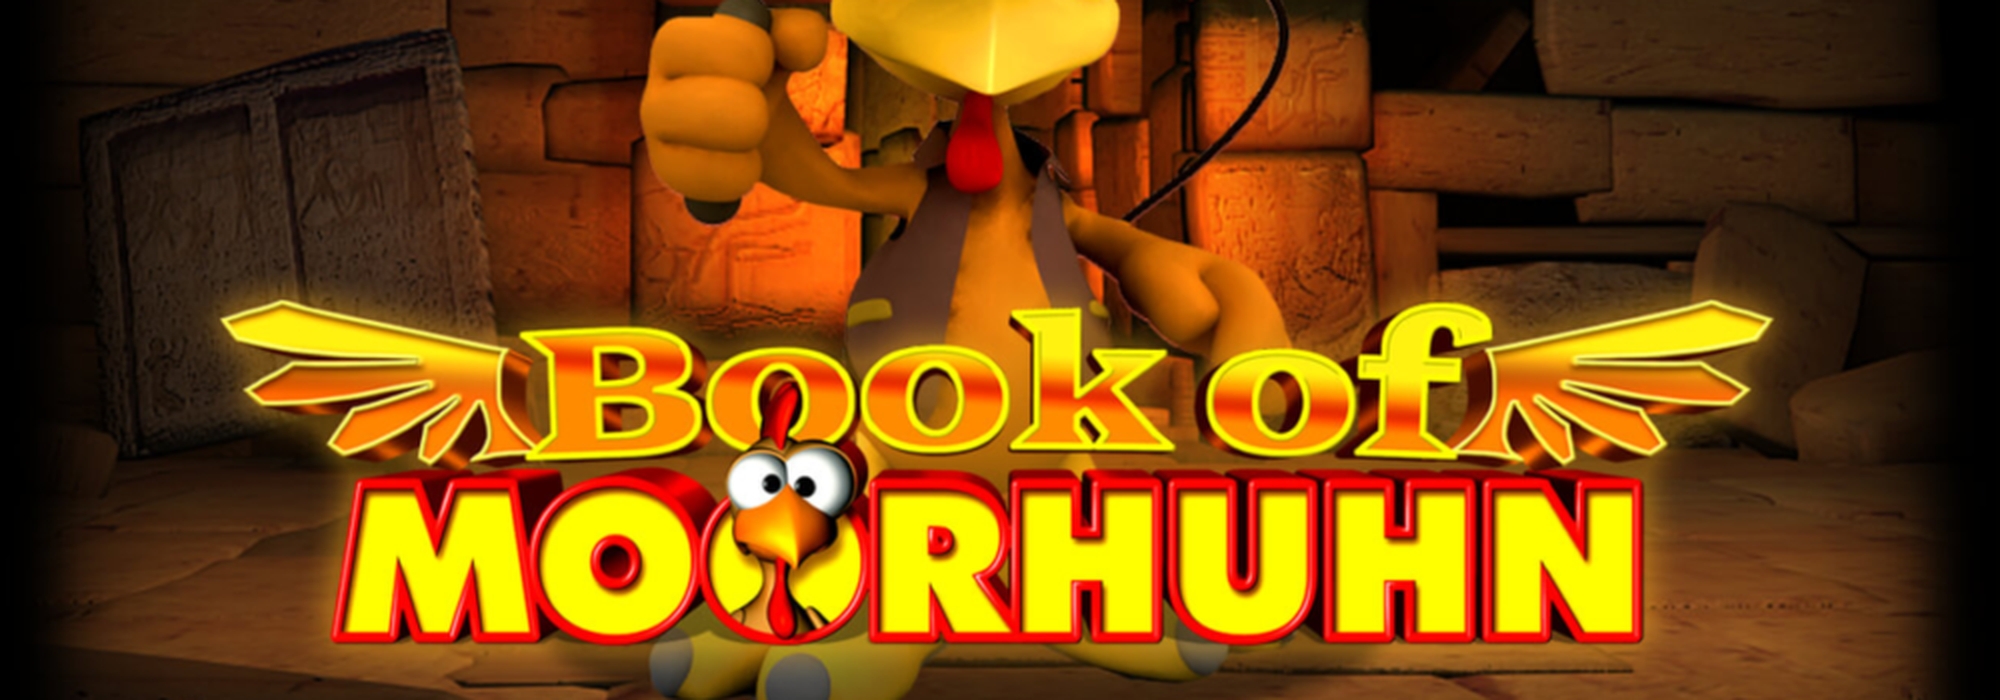 Book of Moorhuhn demo